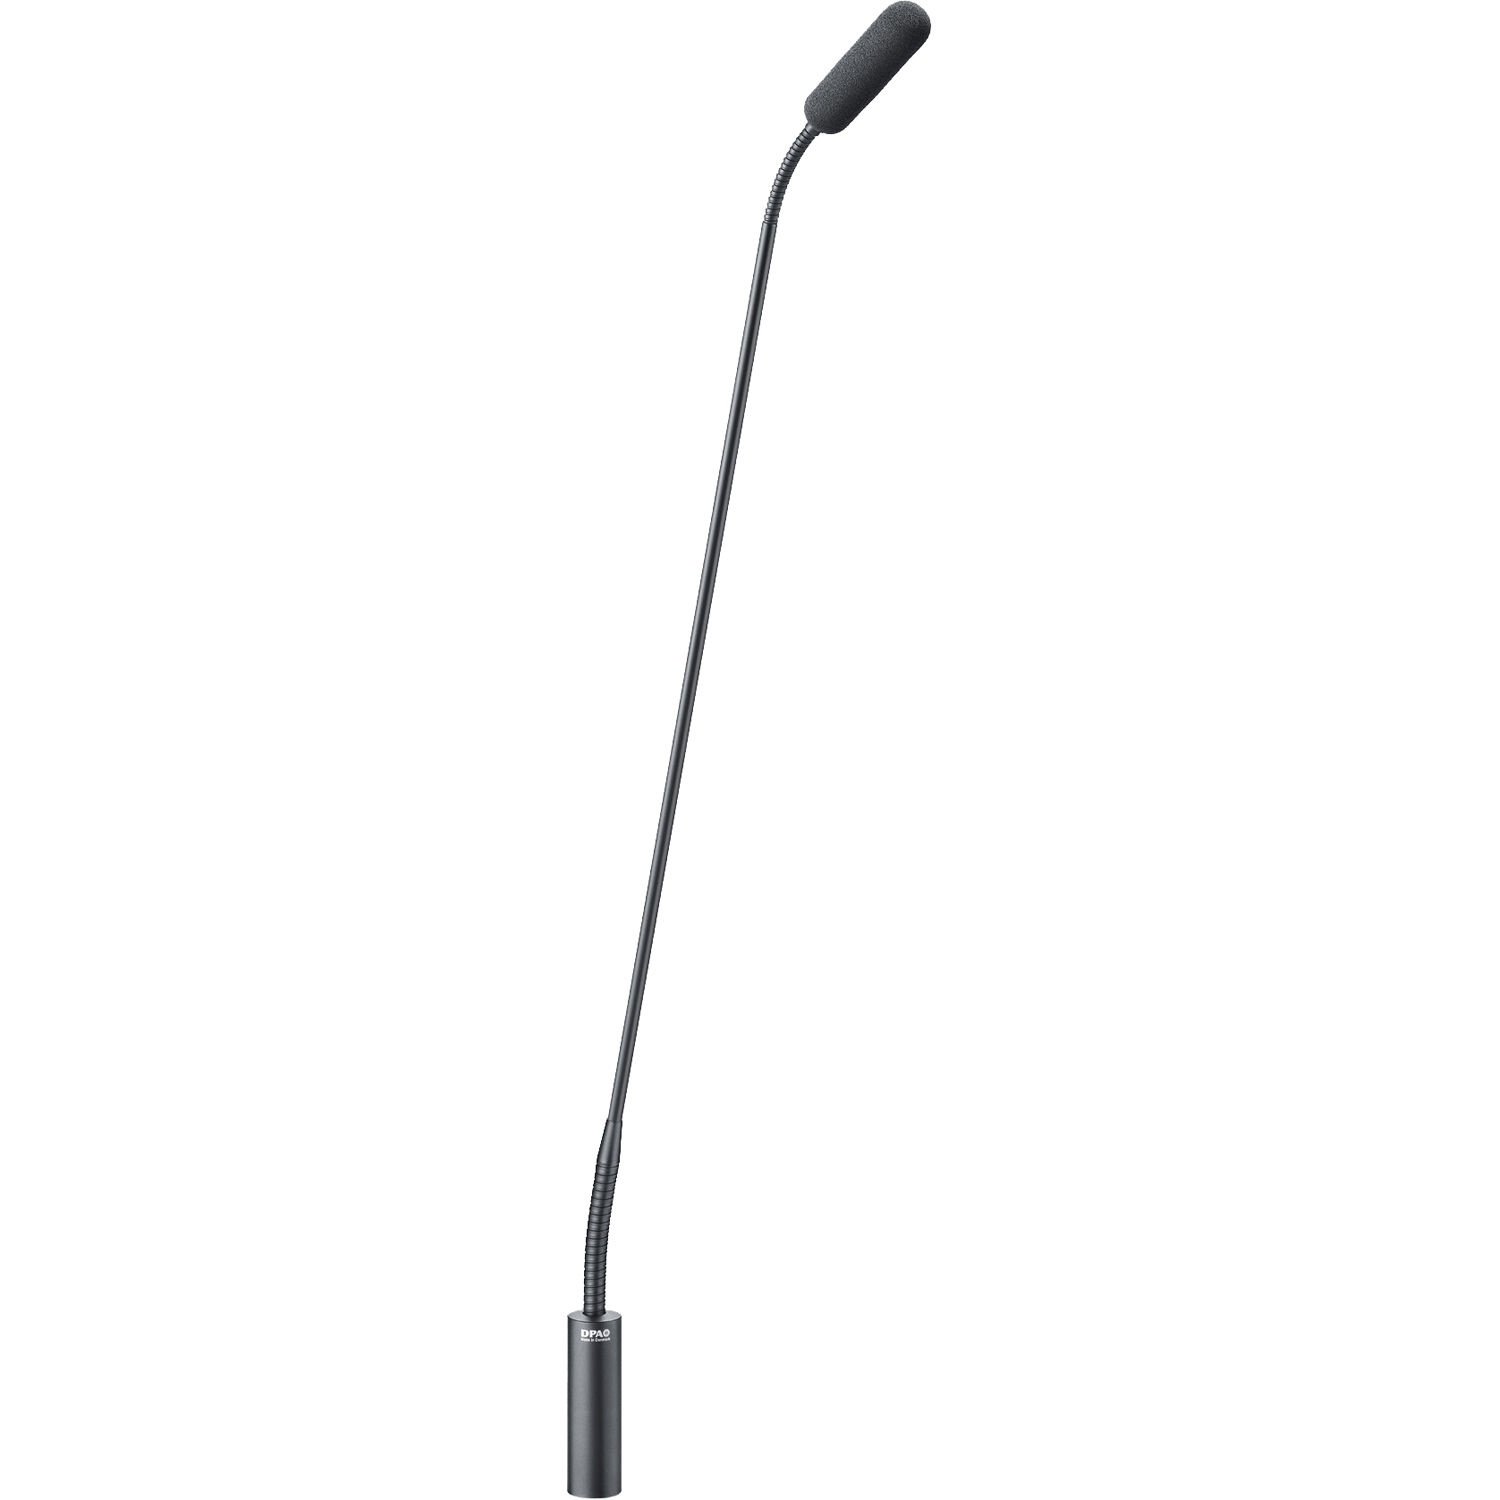 DPA Microphones 4098 Core Supercardioid Microphone with 45 cm Gooseneck Boom (Black)